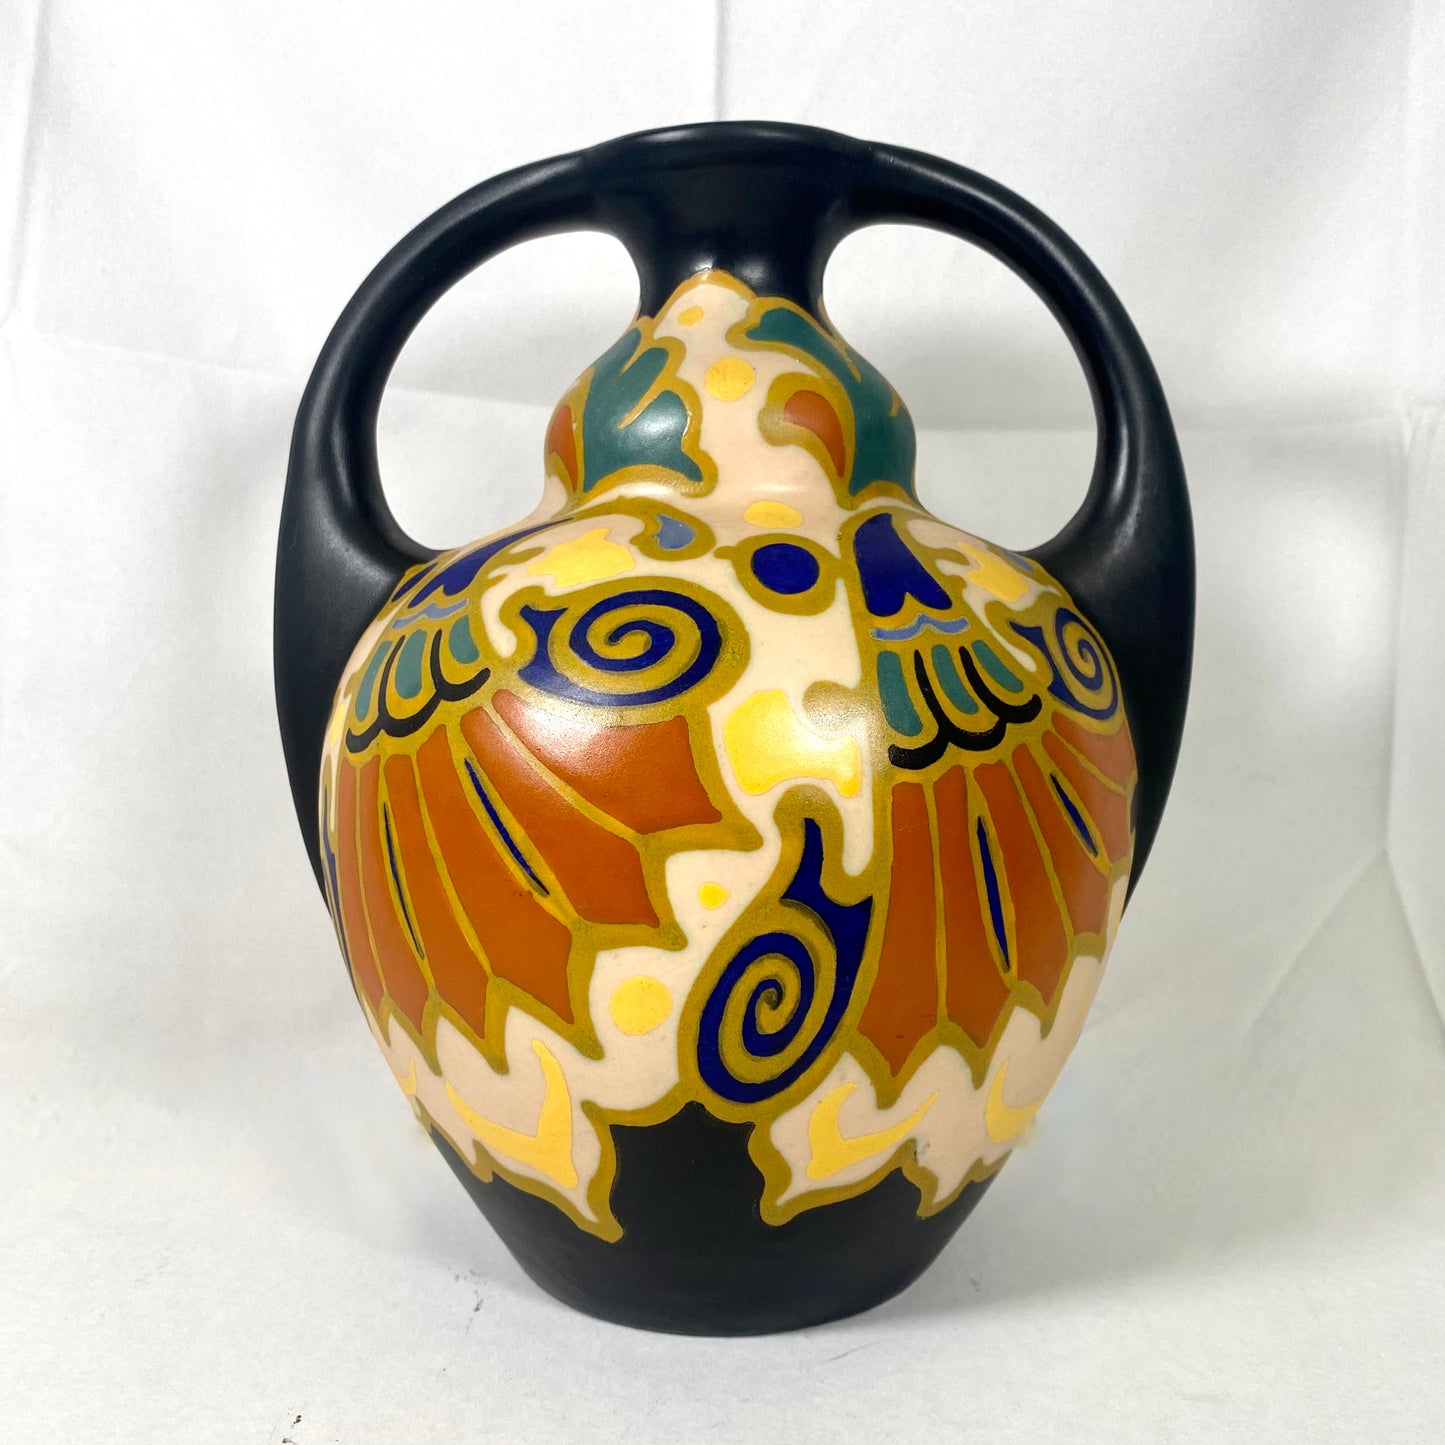 Rare Gouda Dutch Art Deco Pottery Twin-Handled Amphora Vase, Darla Pattern c.1920s